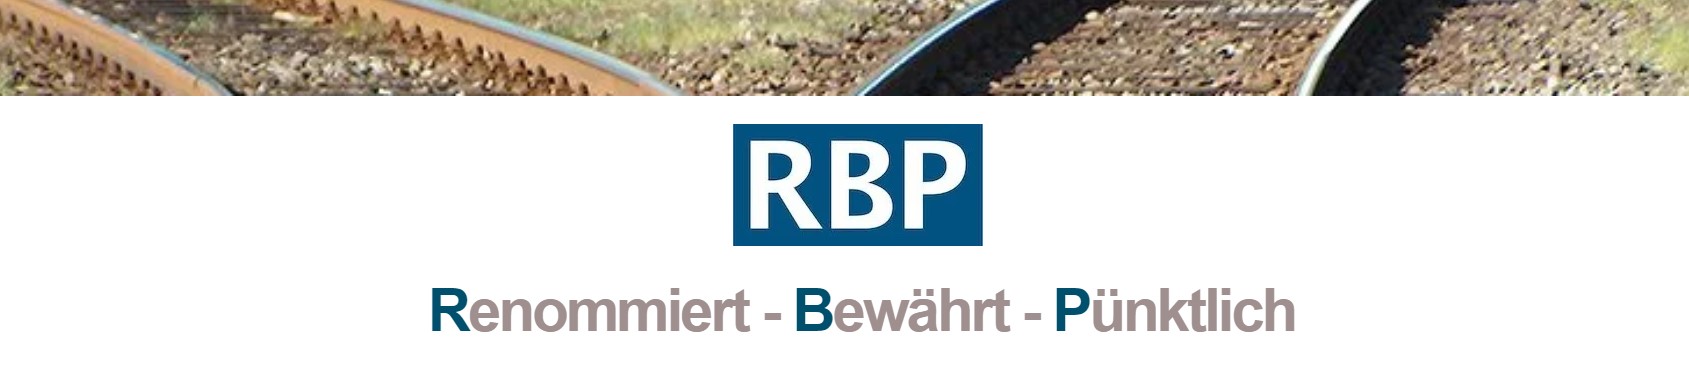 RBP-Rheinische Bahnpersonal- und Verkehrsgesellschaft mbH – Siegburg 53721 (EVU)